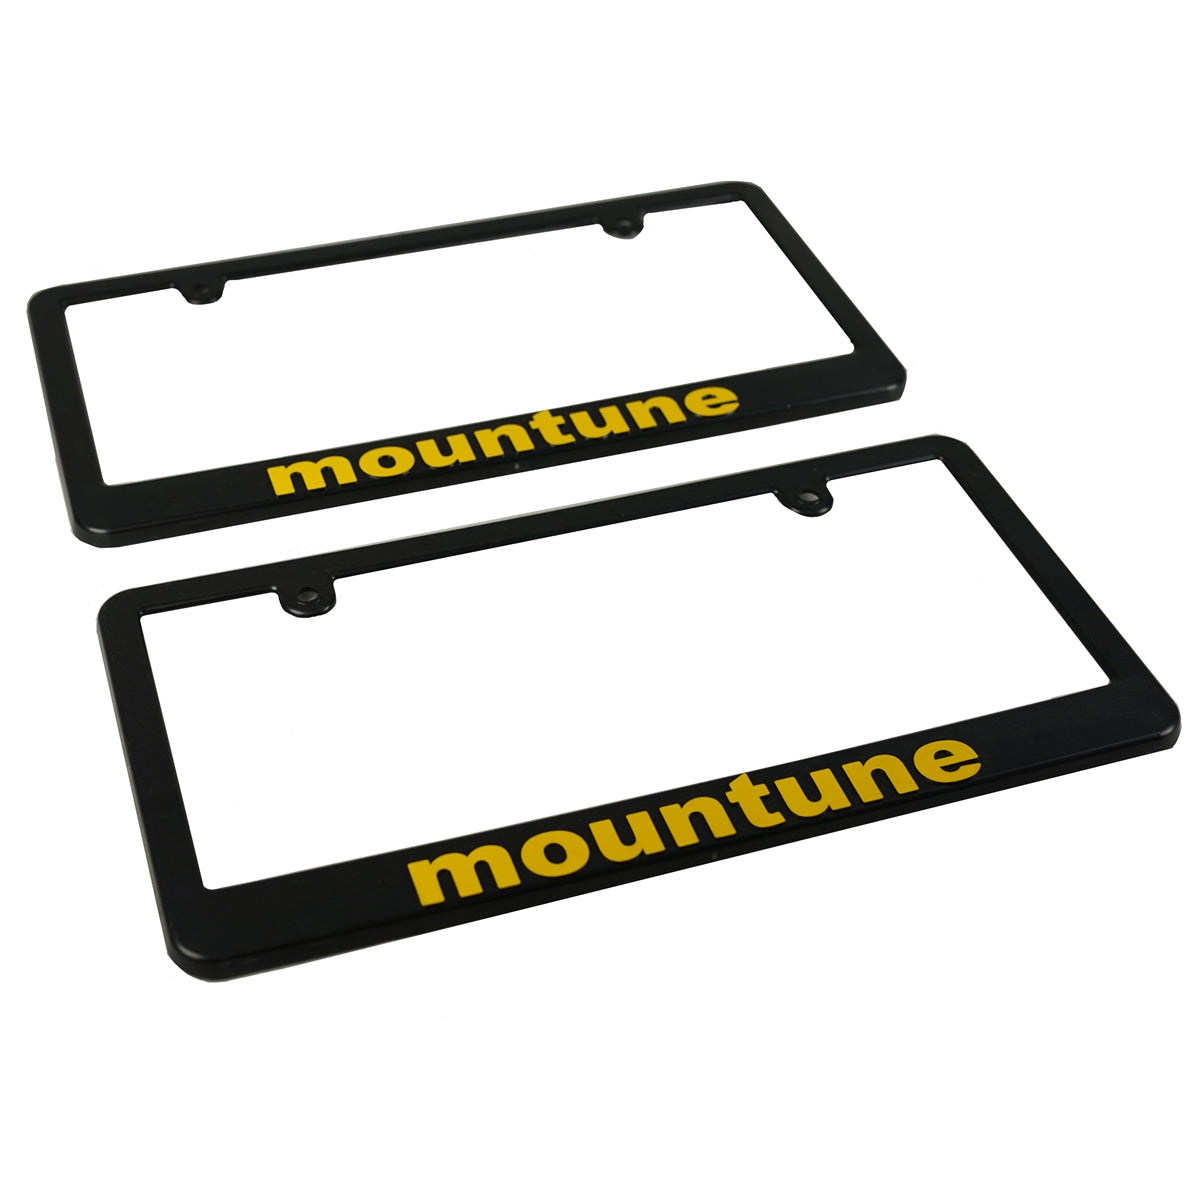 mountune License Plate Frame Set